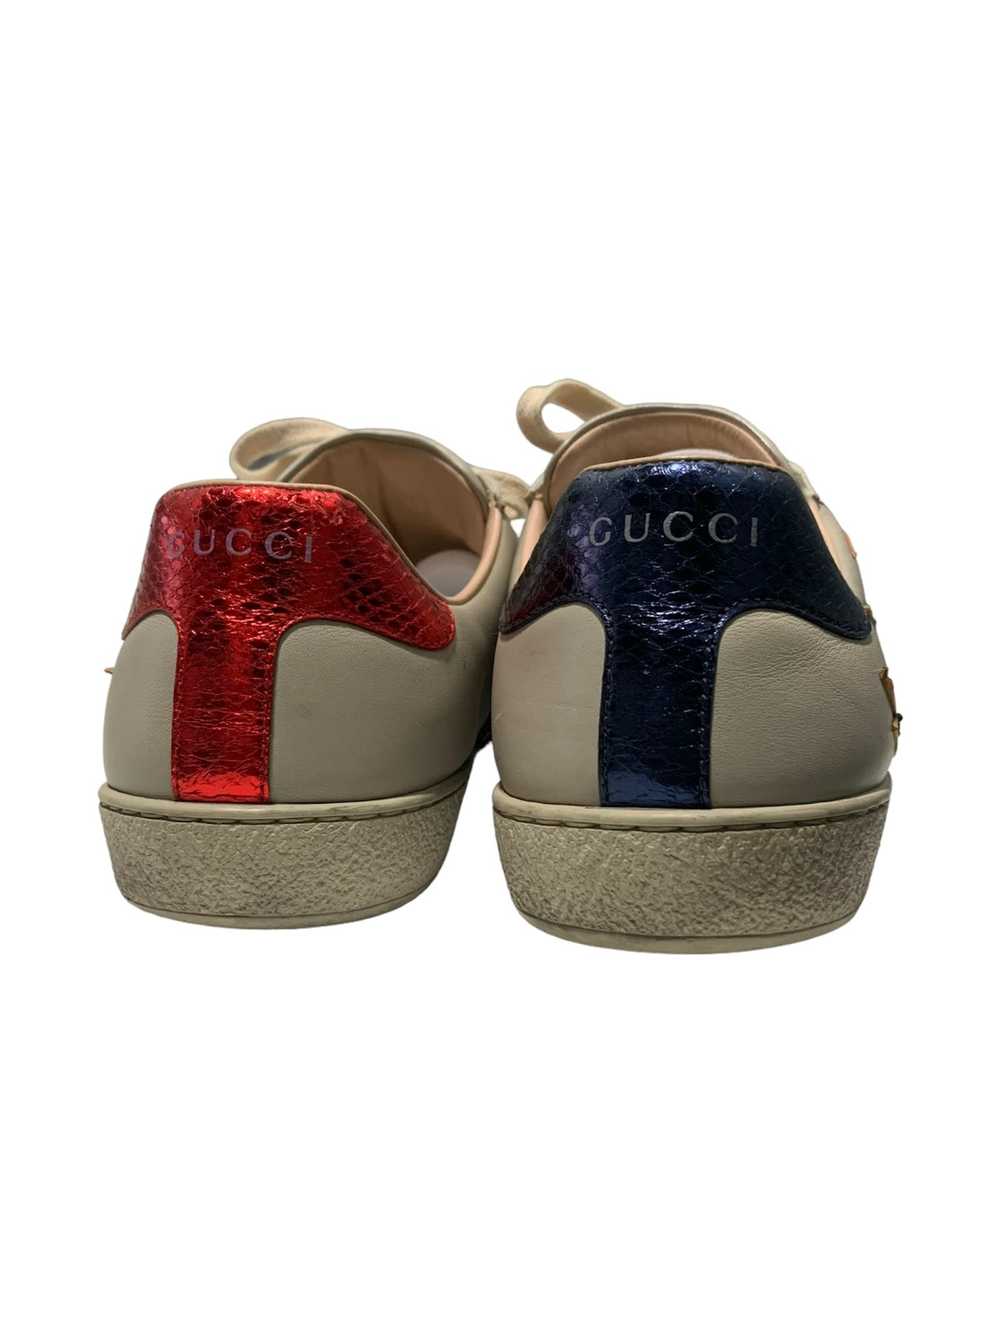 Gucci Gucci Ace flames - image 6